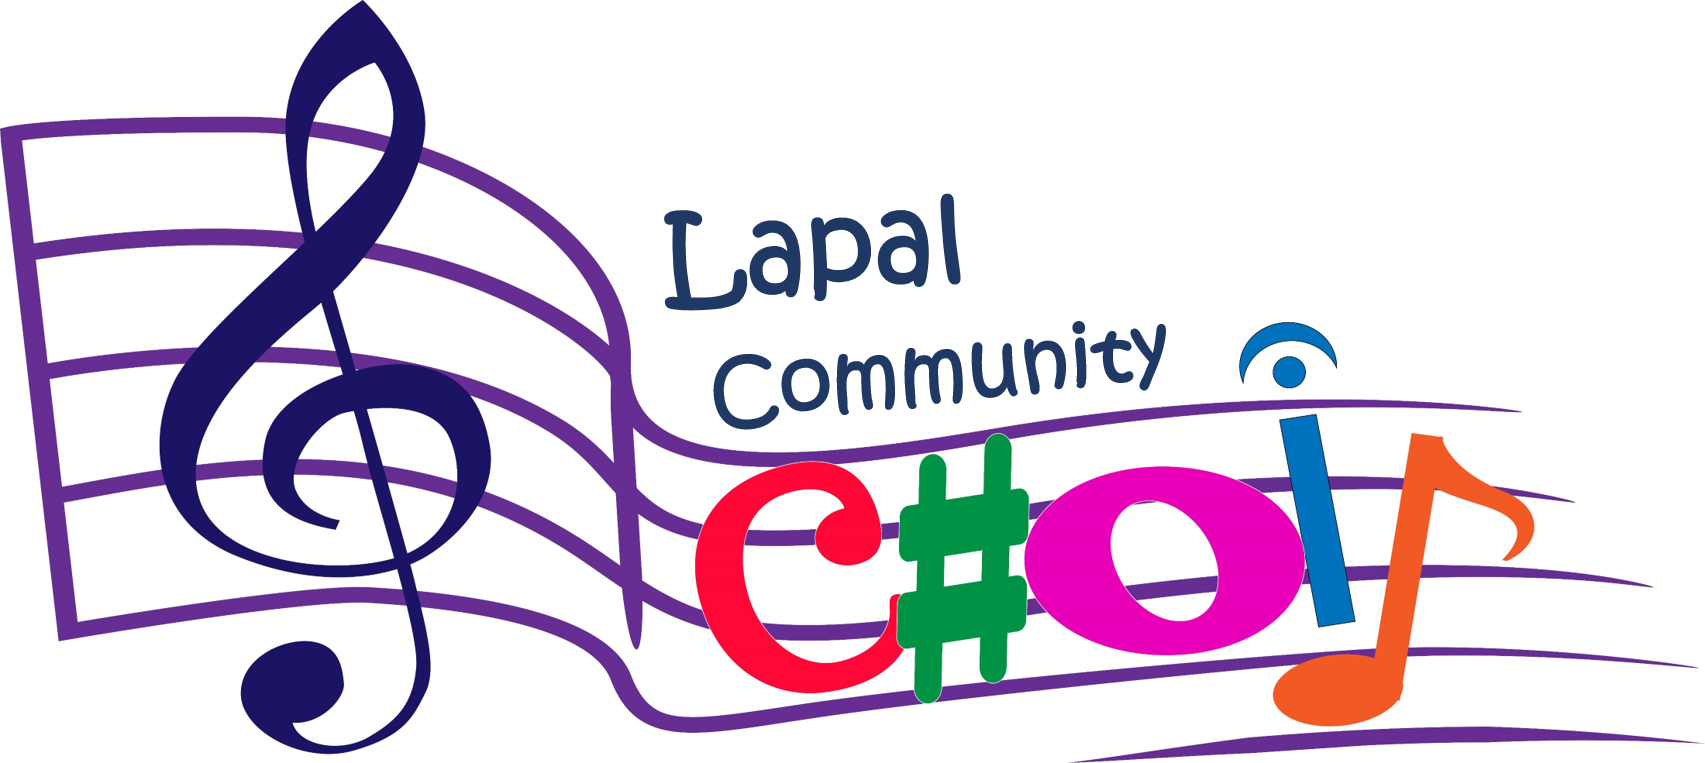 Lapal Community Choir